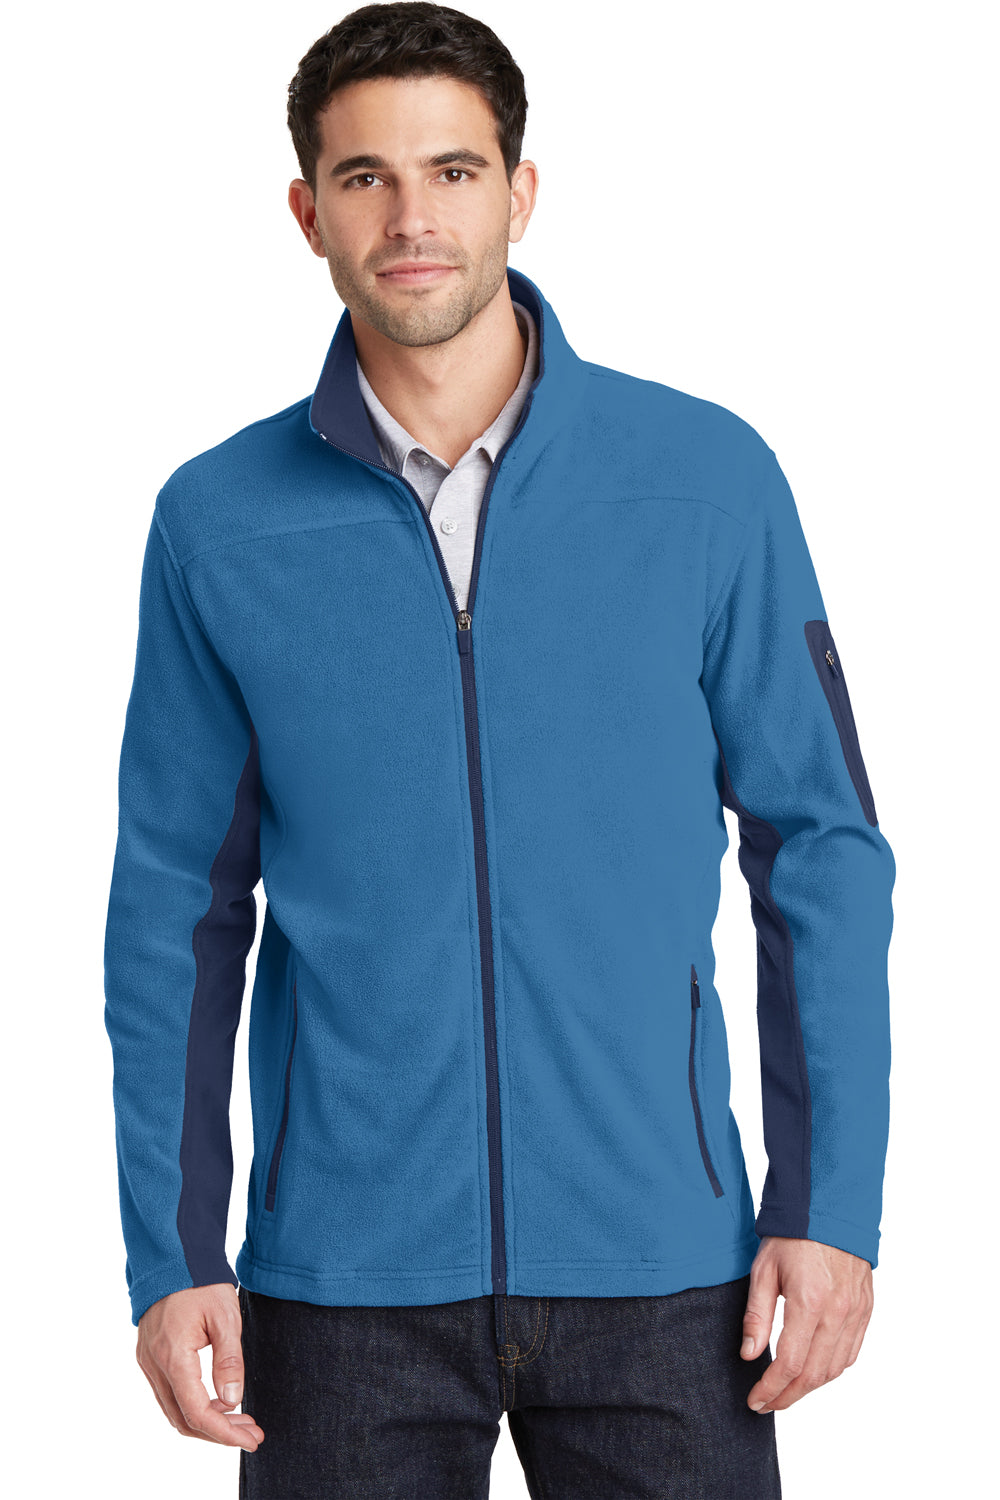 Port Authority F233 Mens Summit Full Zip Fleece Jacket Regal Blue/Navy Blue Front